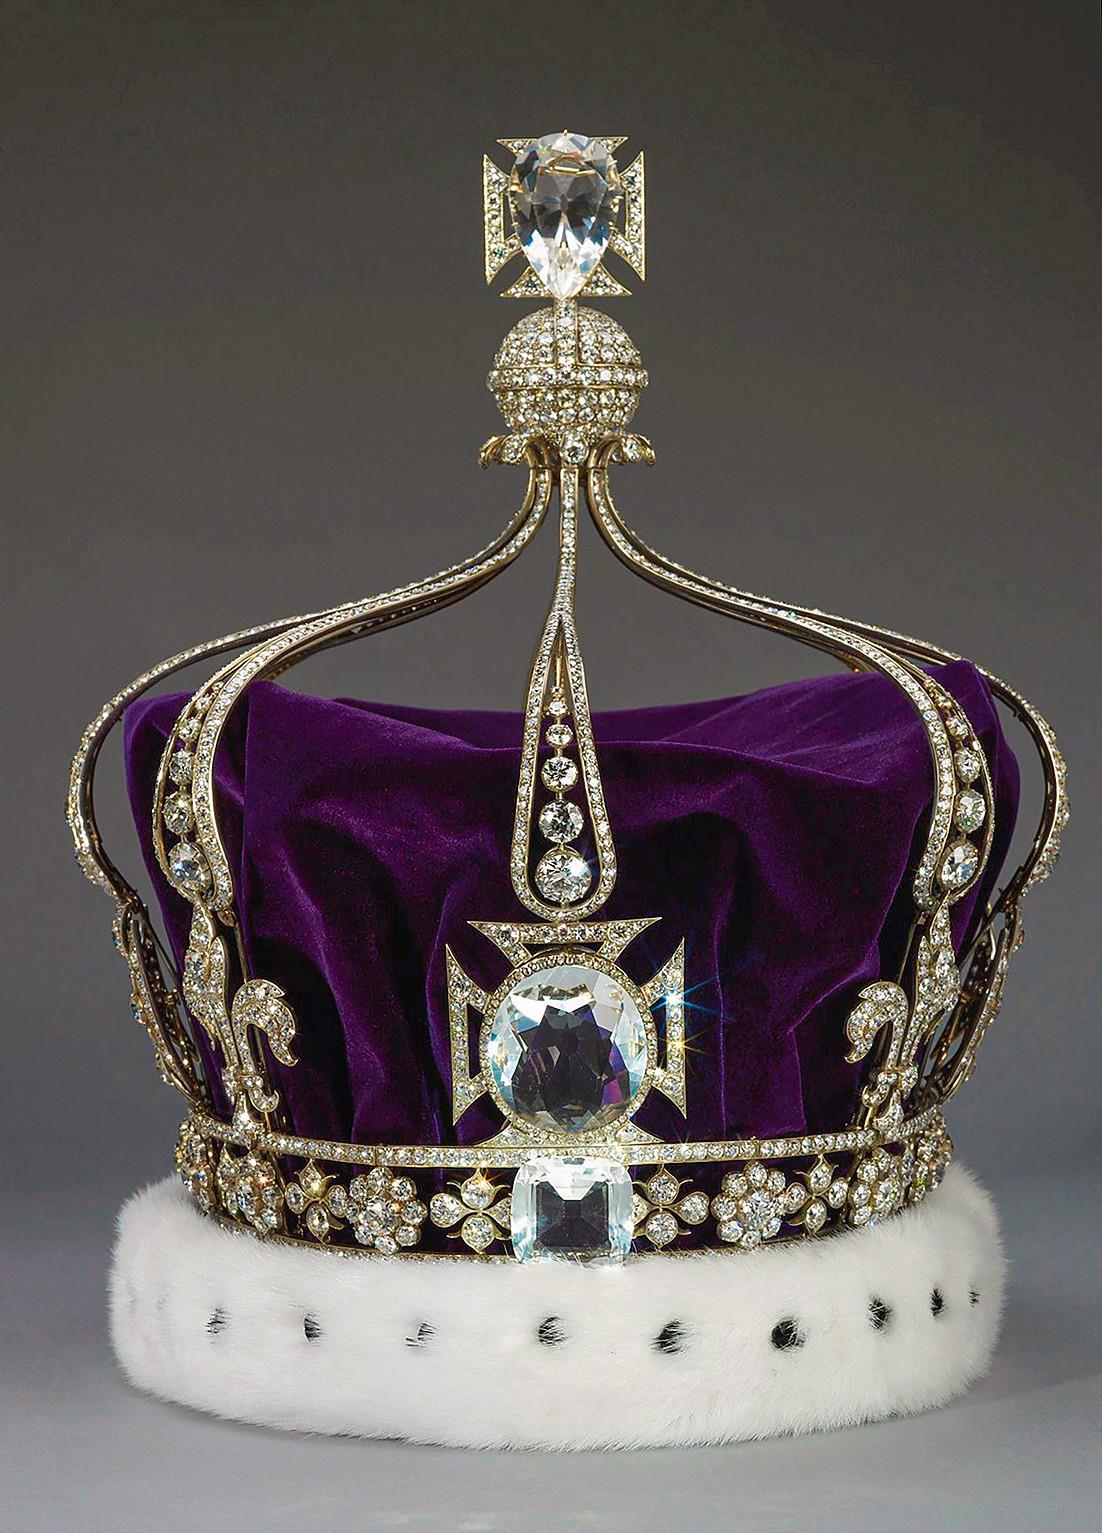 Koh-i-noor diamond not part of King Charles III's coronation